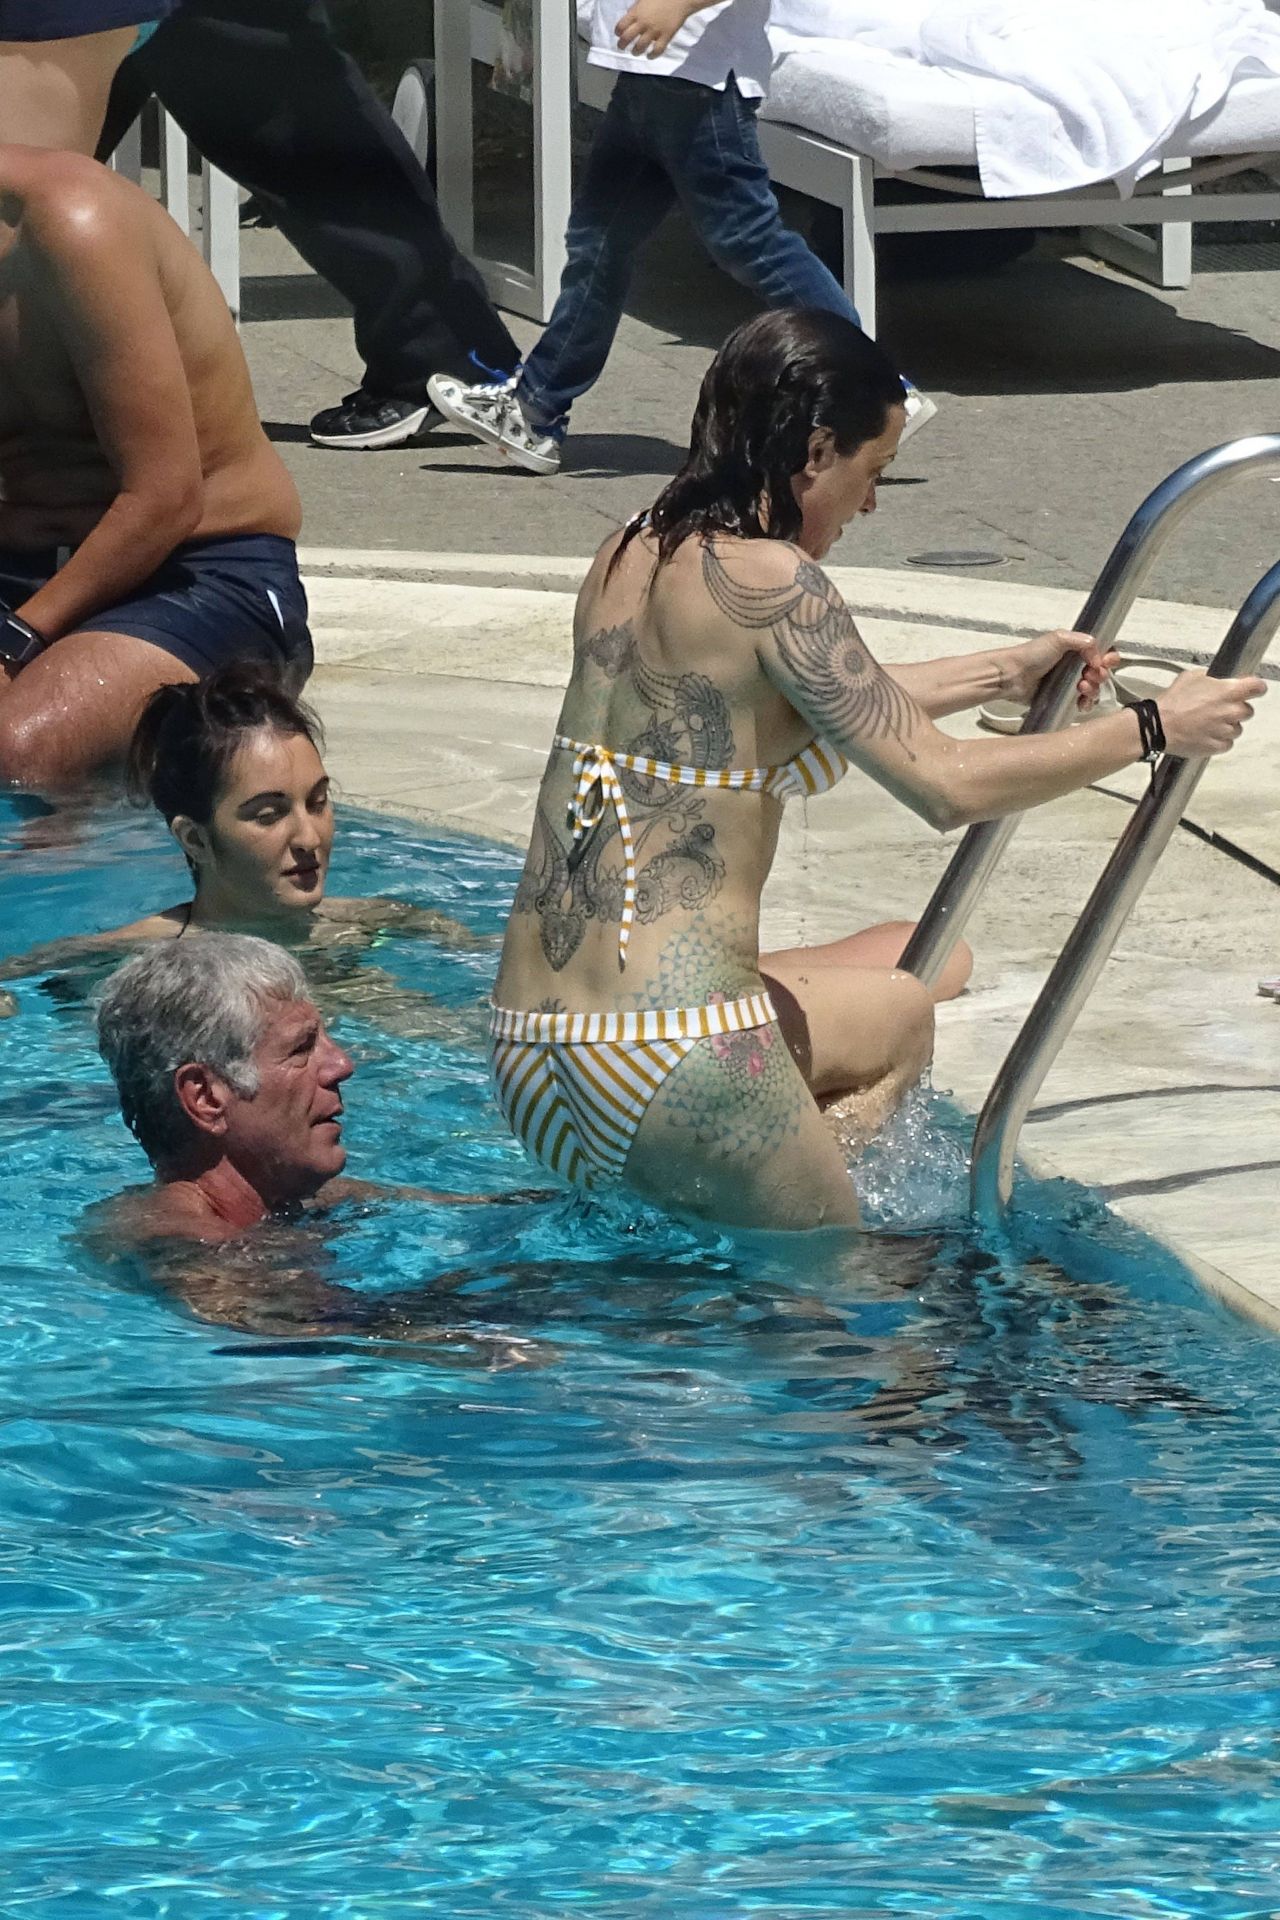 Asia Argento in Bikini at the Hotel Hilton’s Swimming Pool in Rome.